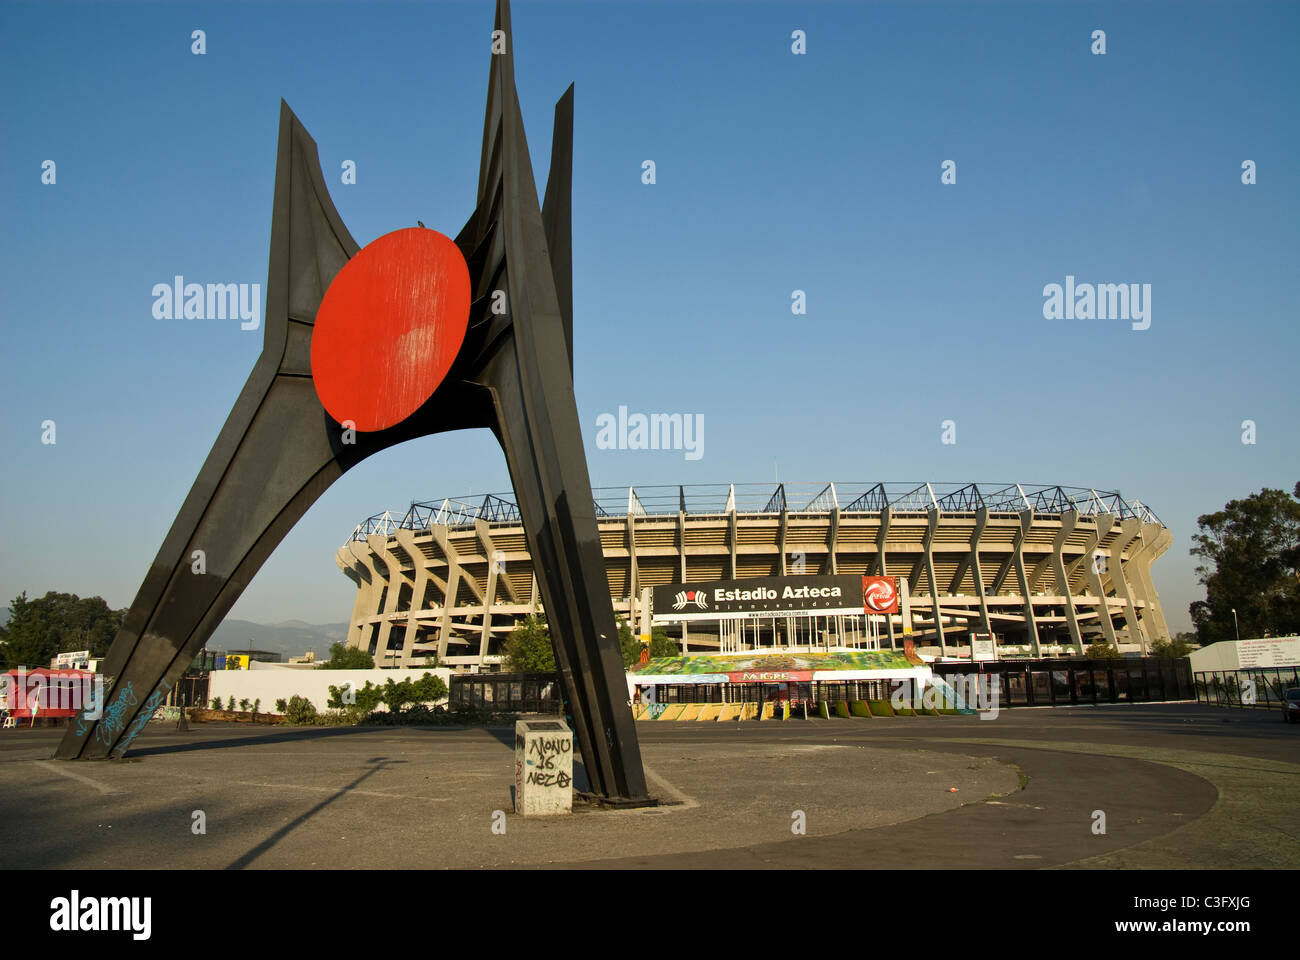 Mexico.Mexico city.Azteca stadium. Stock Photo